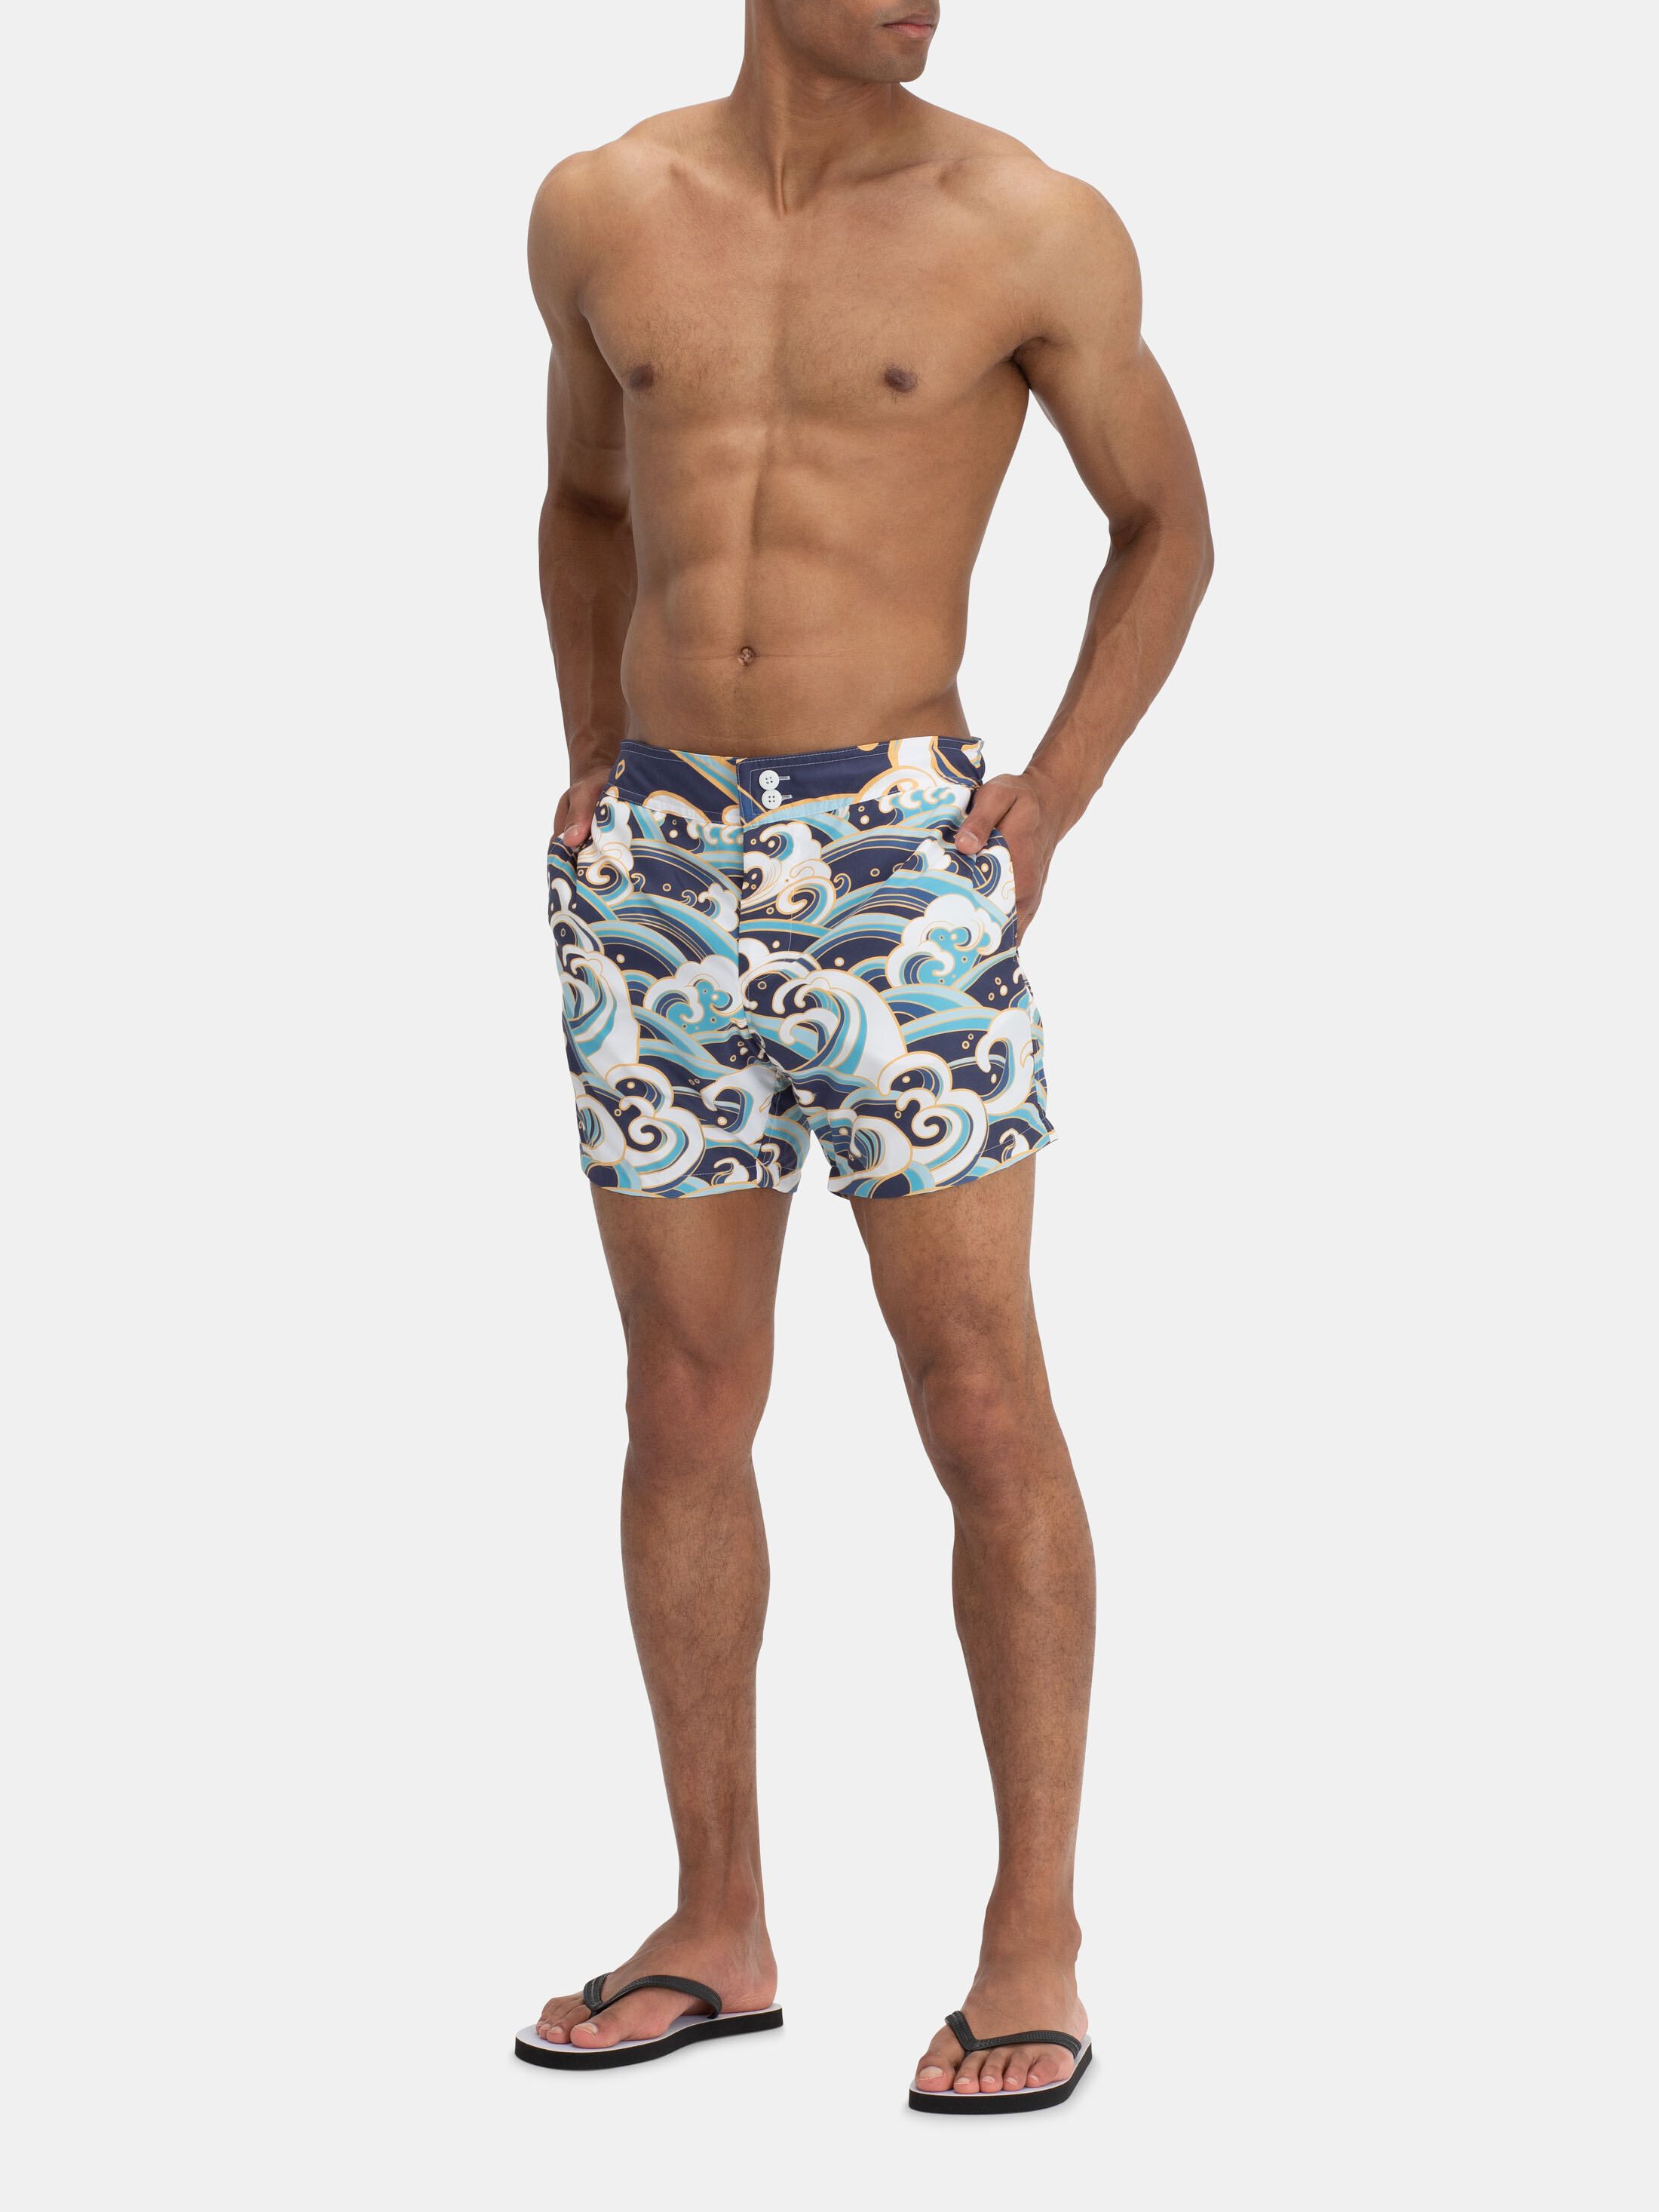 design your own slim fit shorts australia